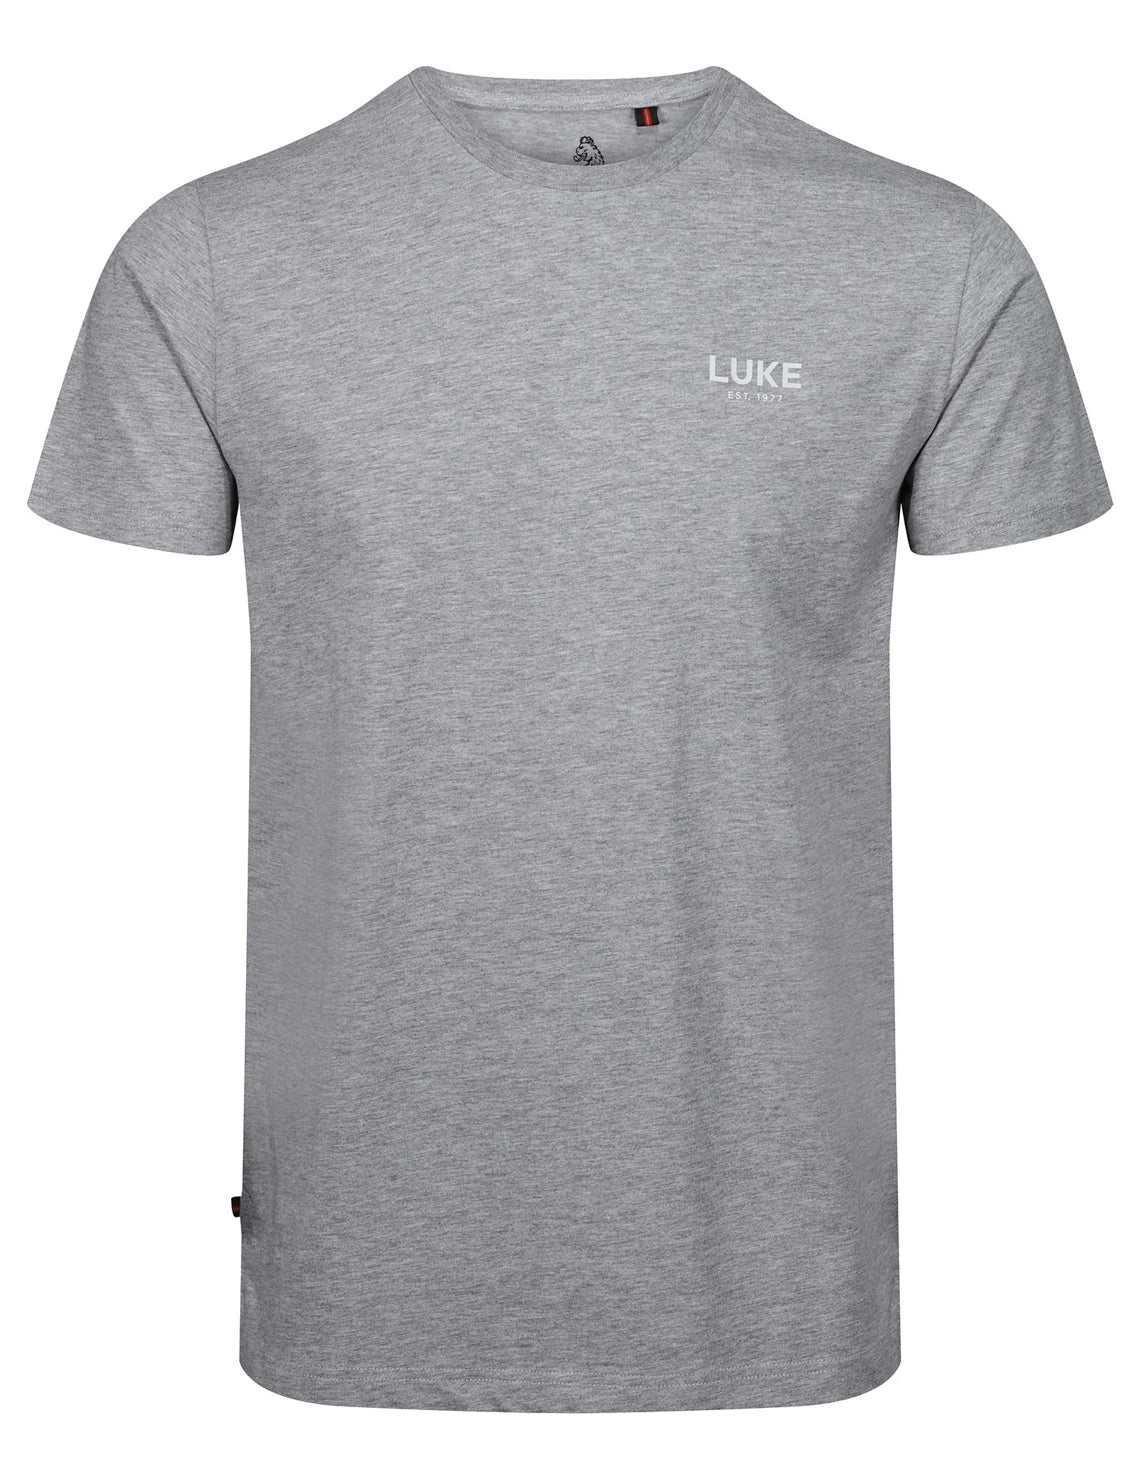 Luke Superb T-Shirt Marle Grey